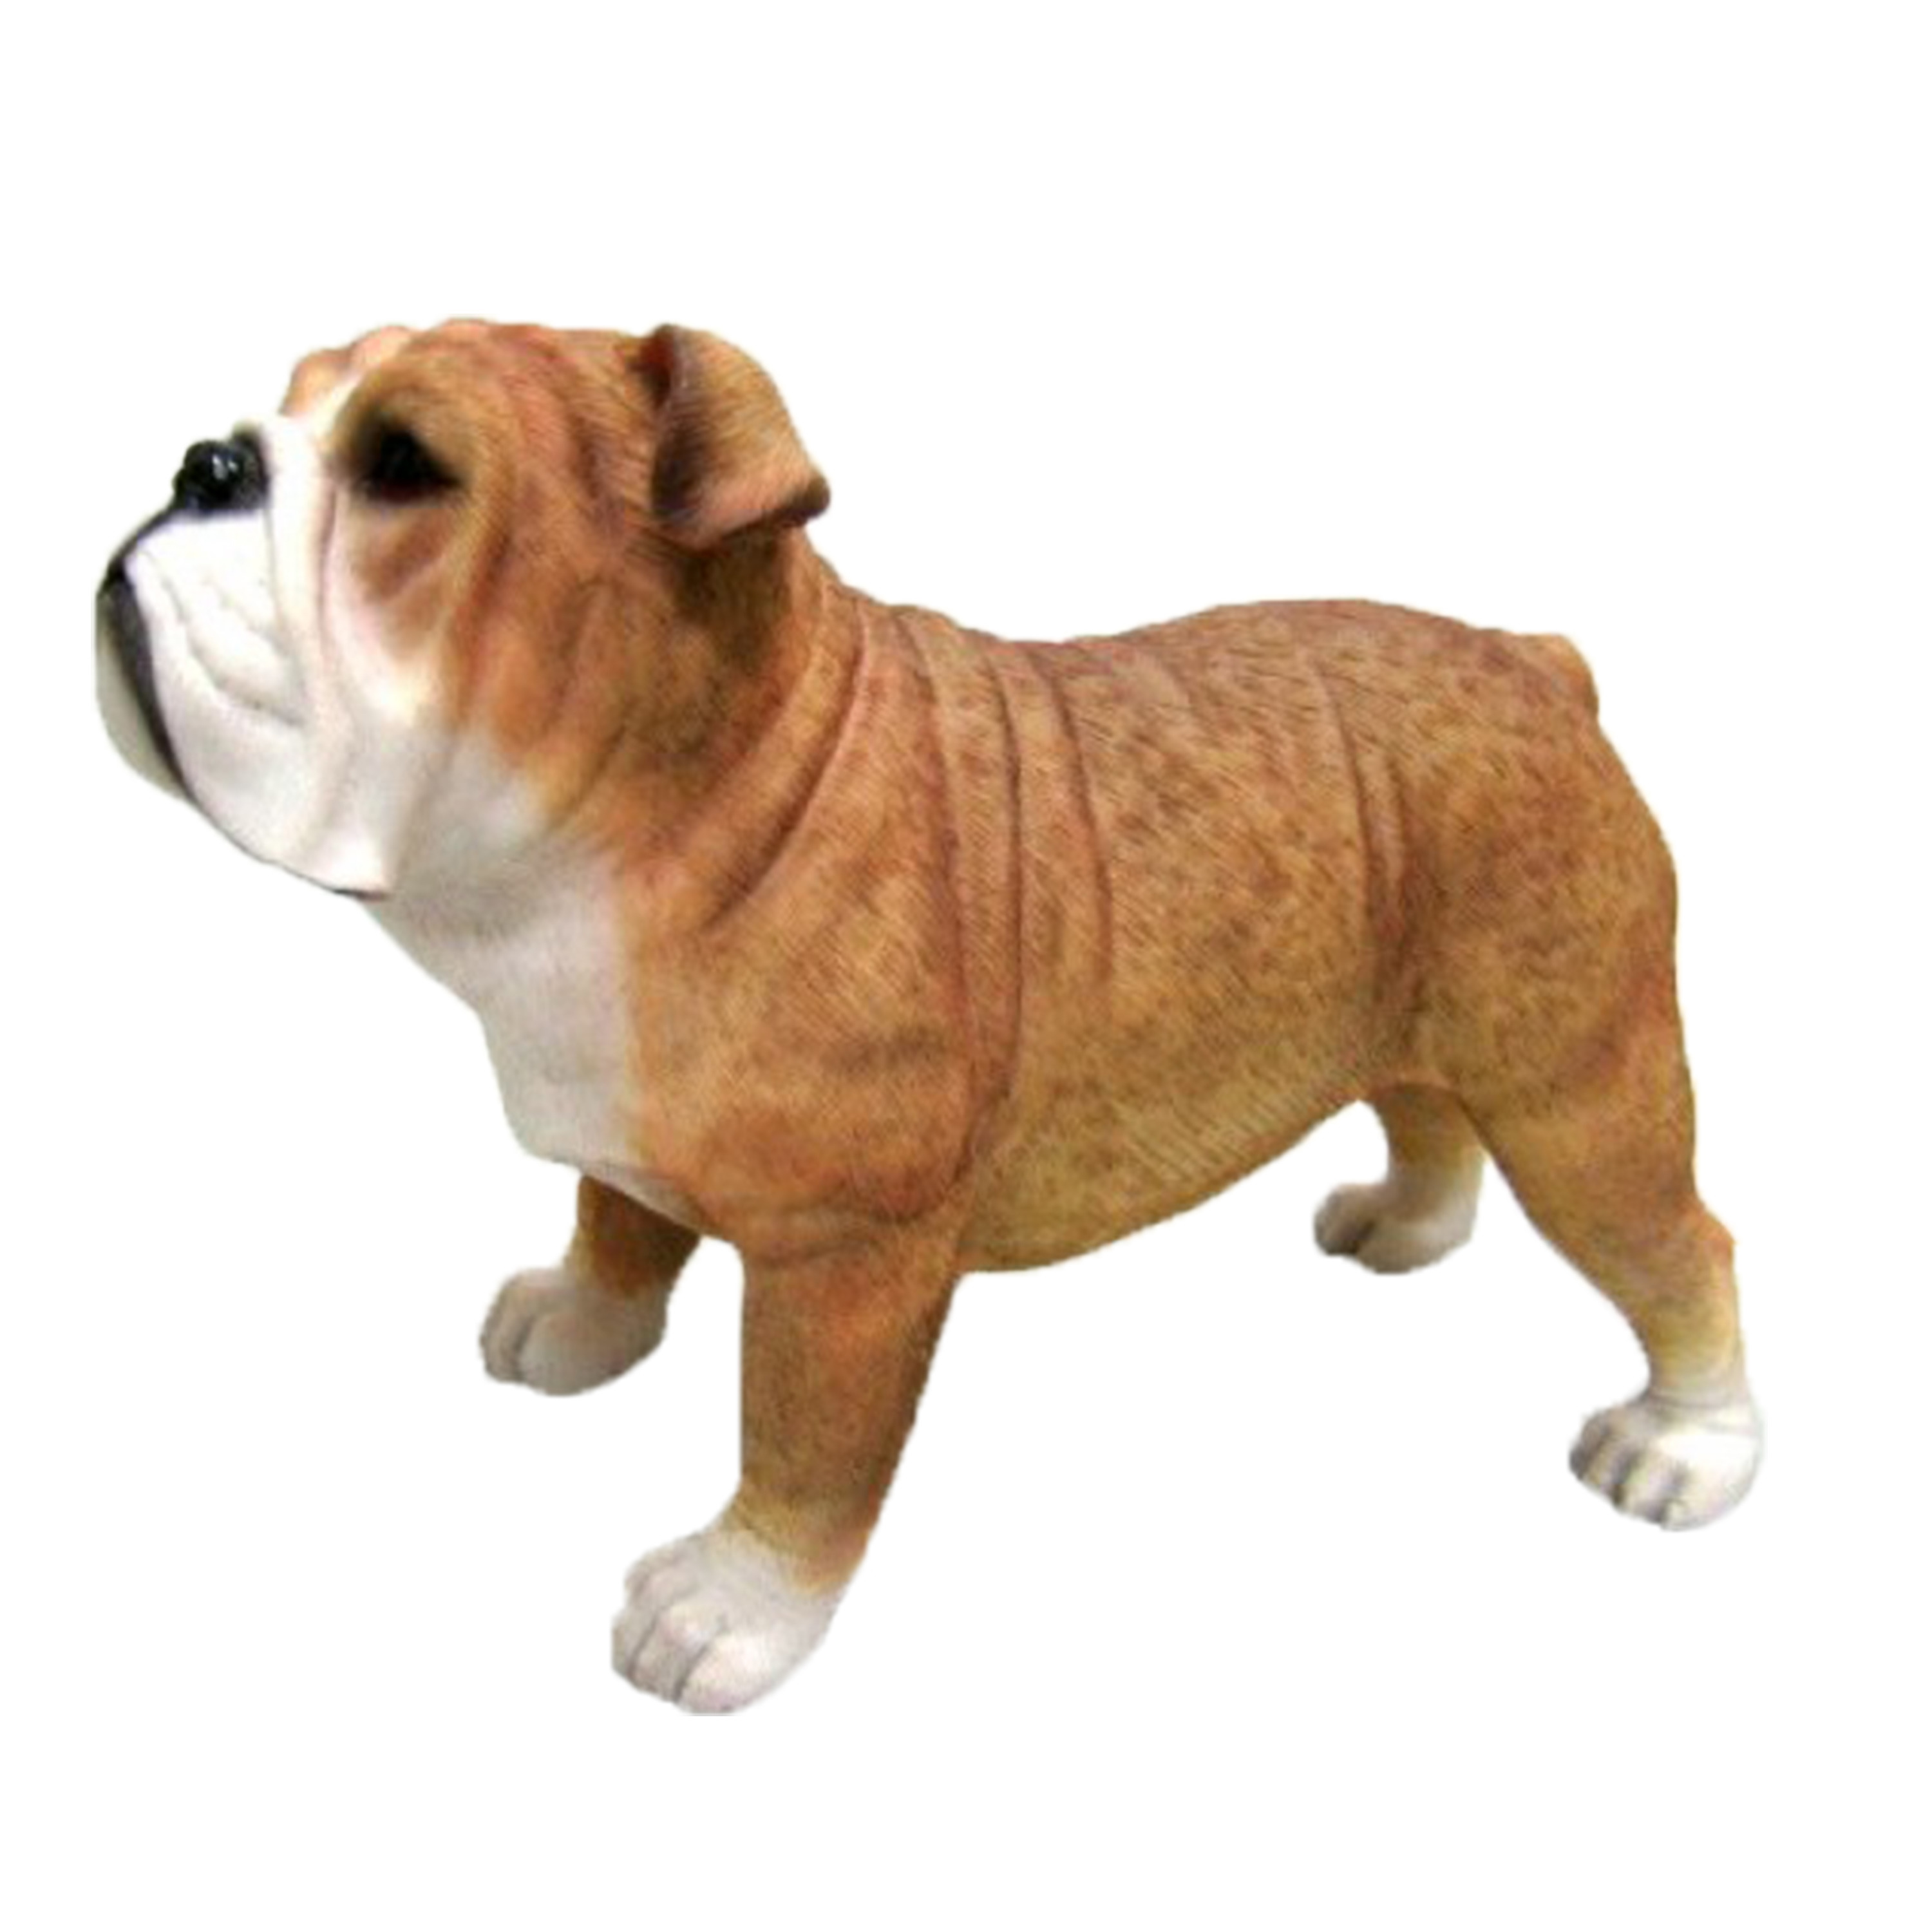 Dierenbeeld Engelse bulldog hond 9 cm